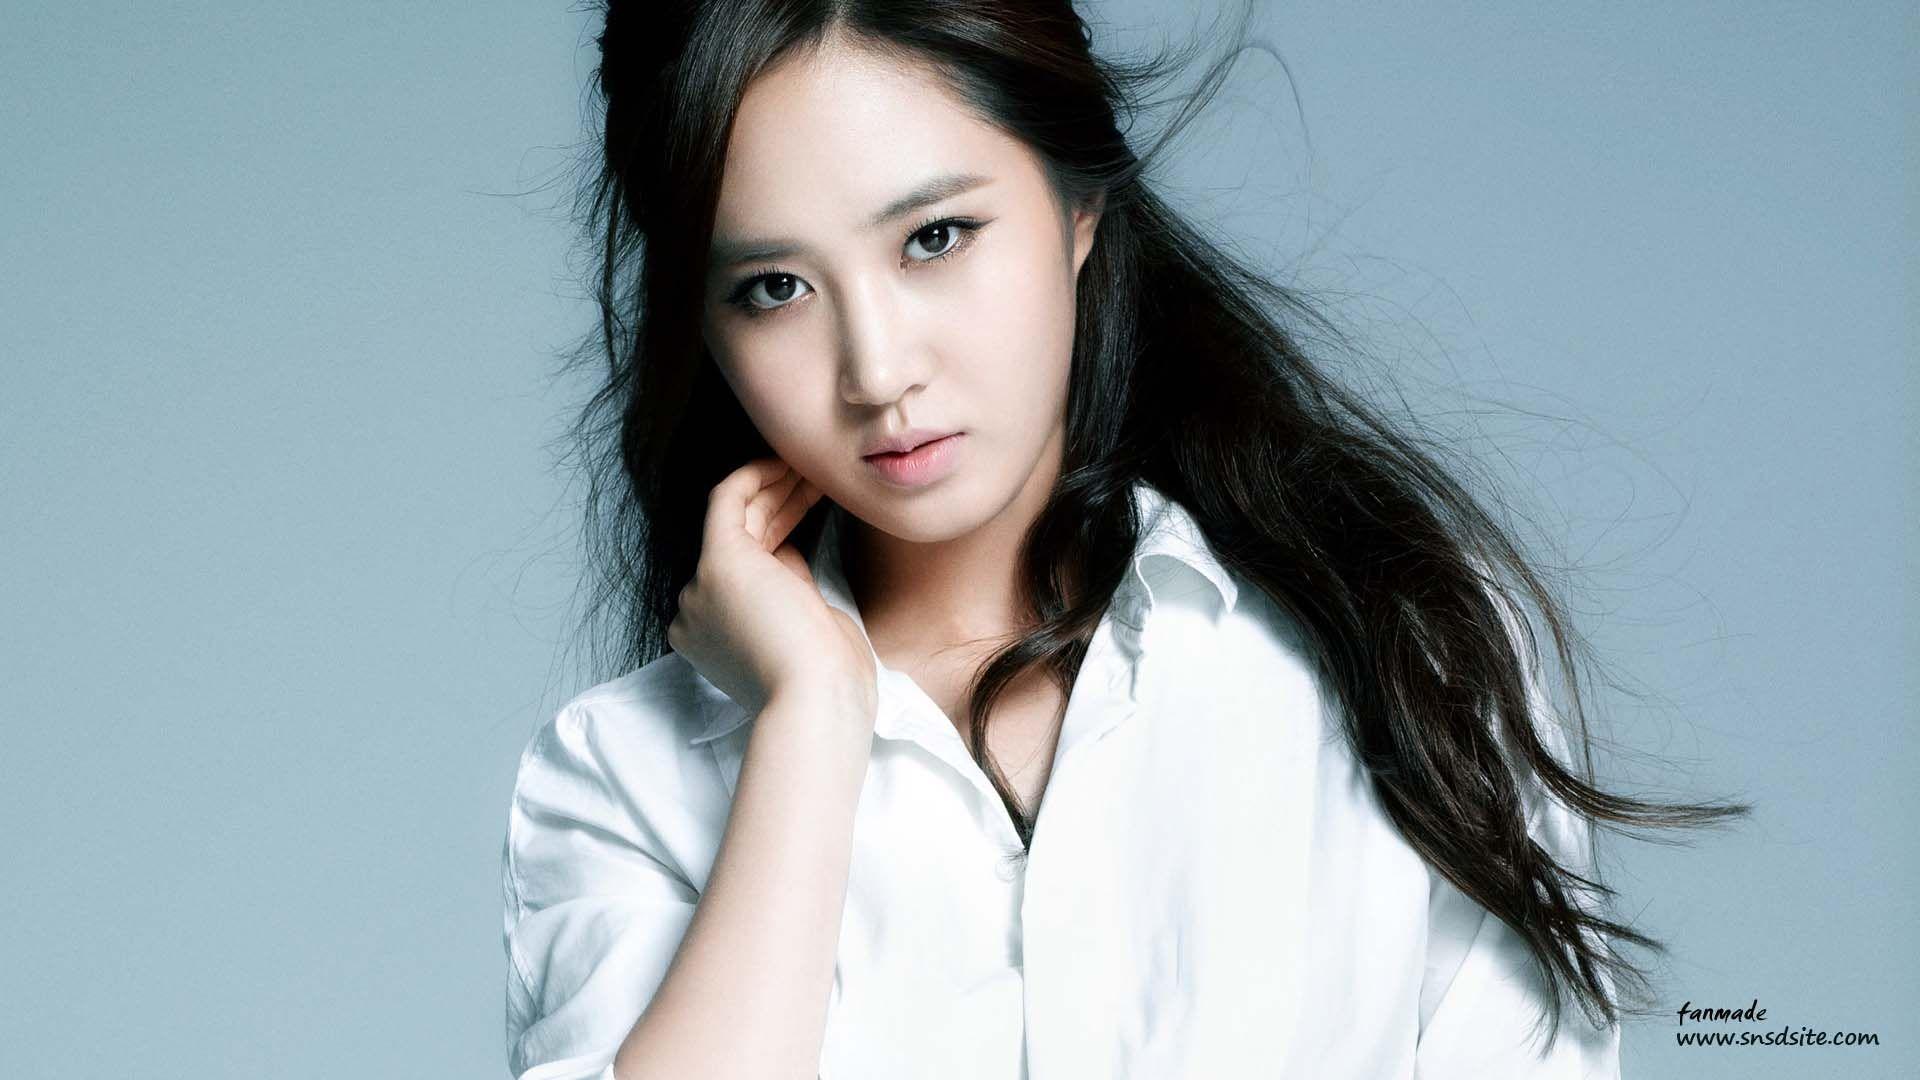 KwonYuri #SNSD. Female celebrities. Yuri, SNSD